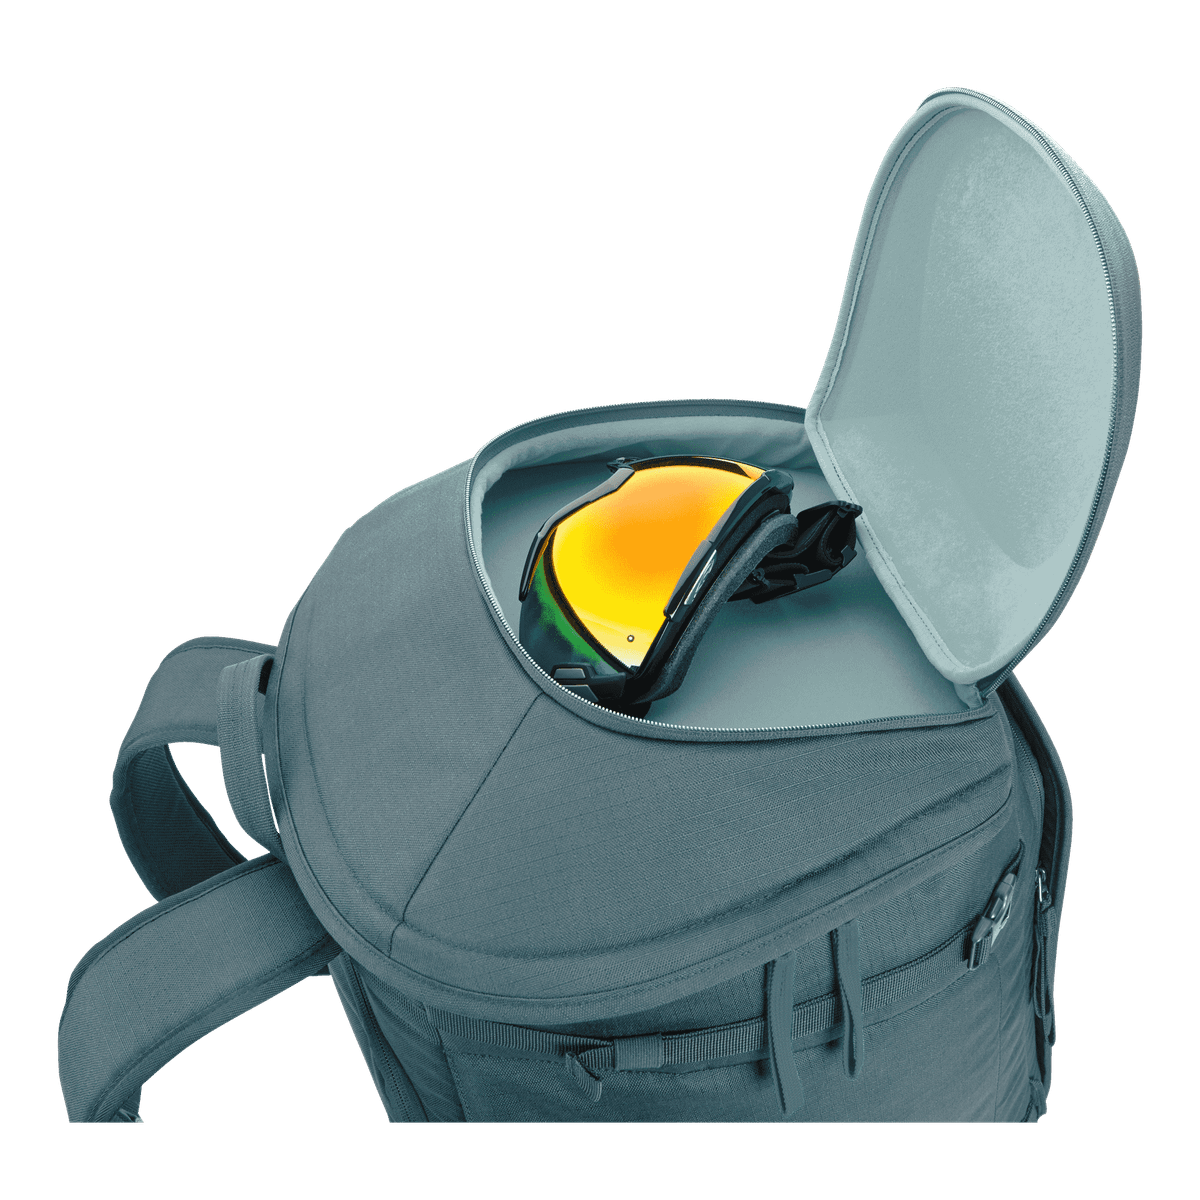 Thule RoundTrip ski boot backpack 60L dark slate gray